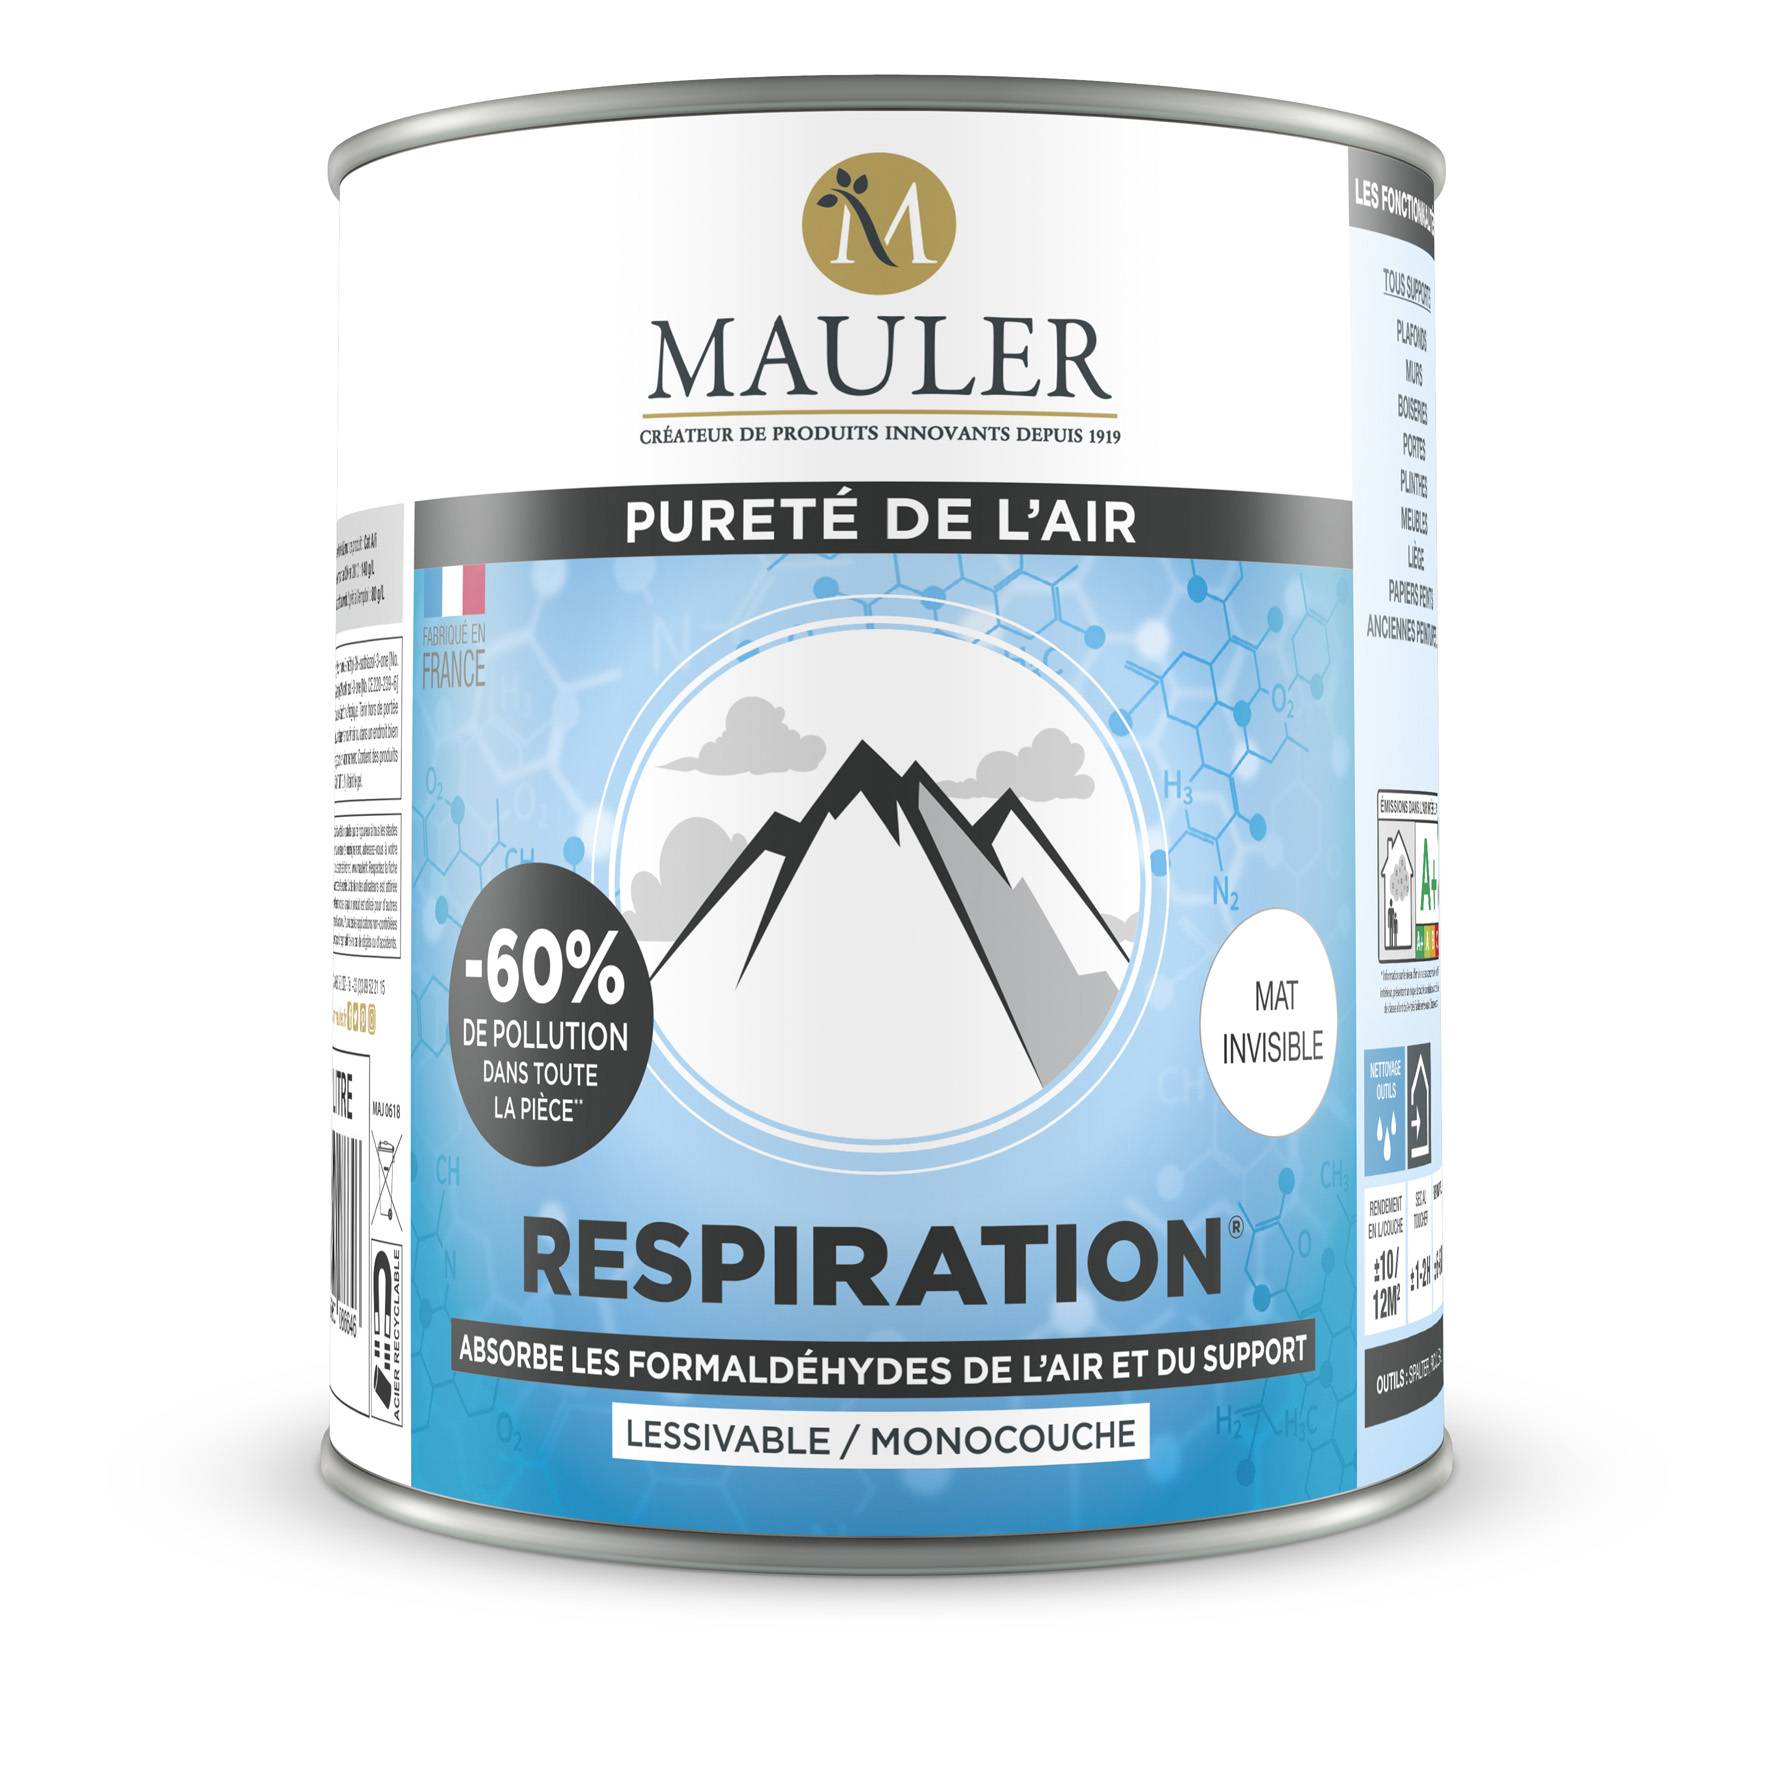 Respiration by Mauler